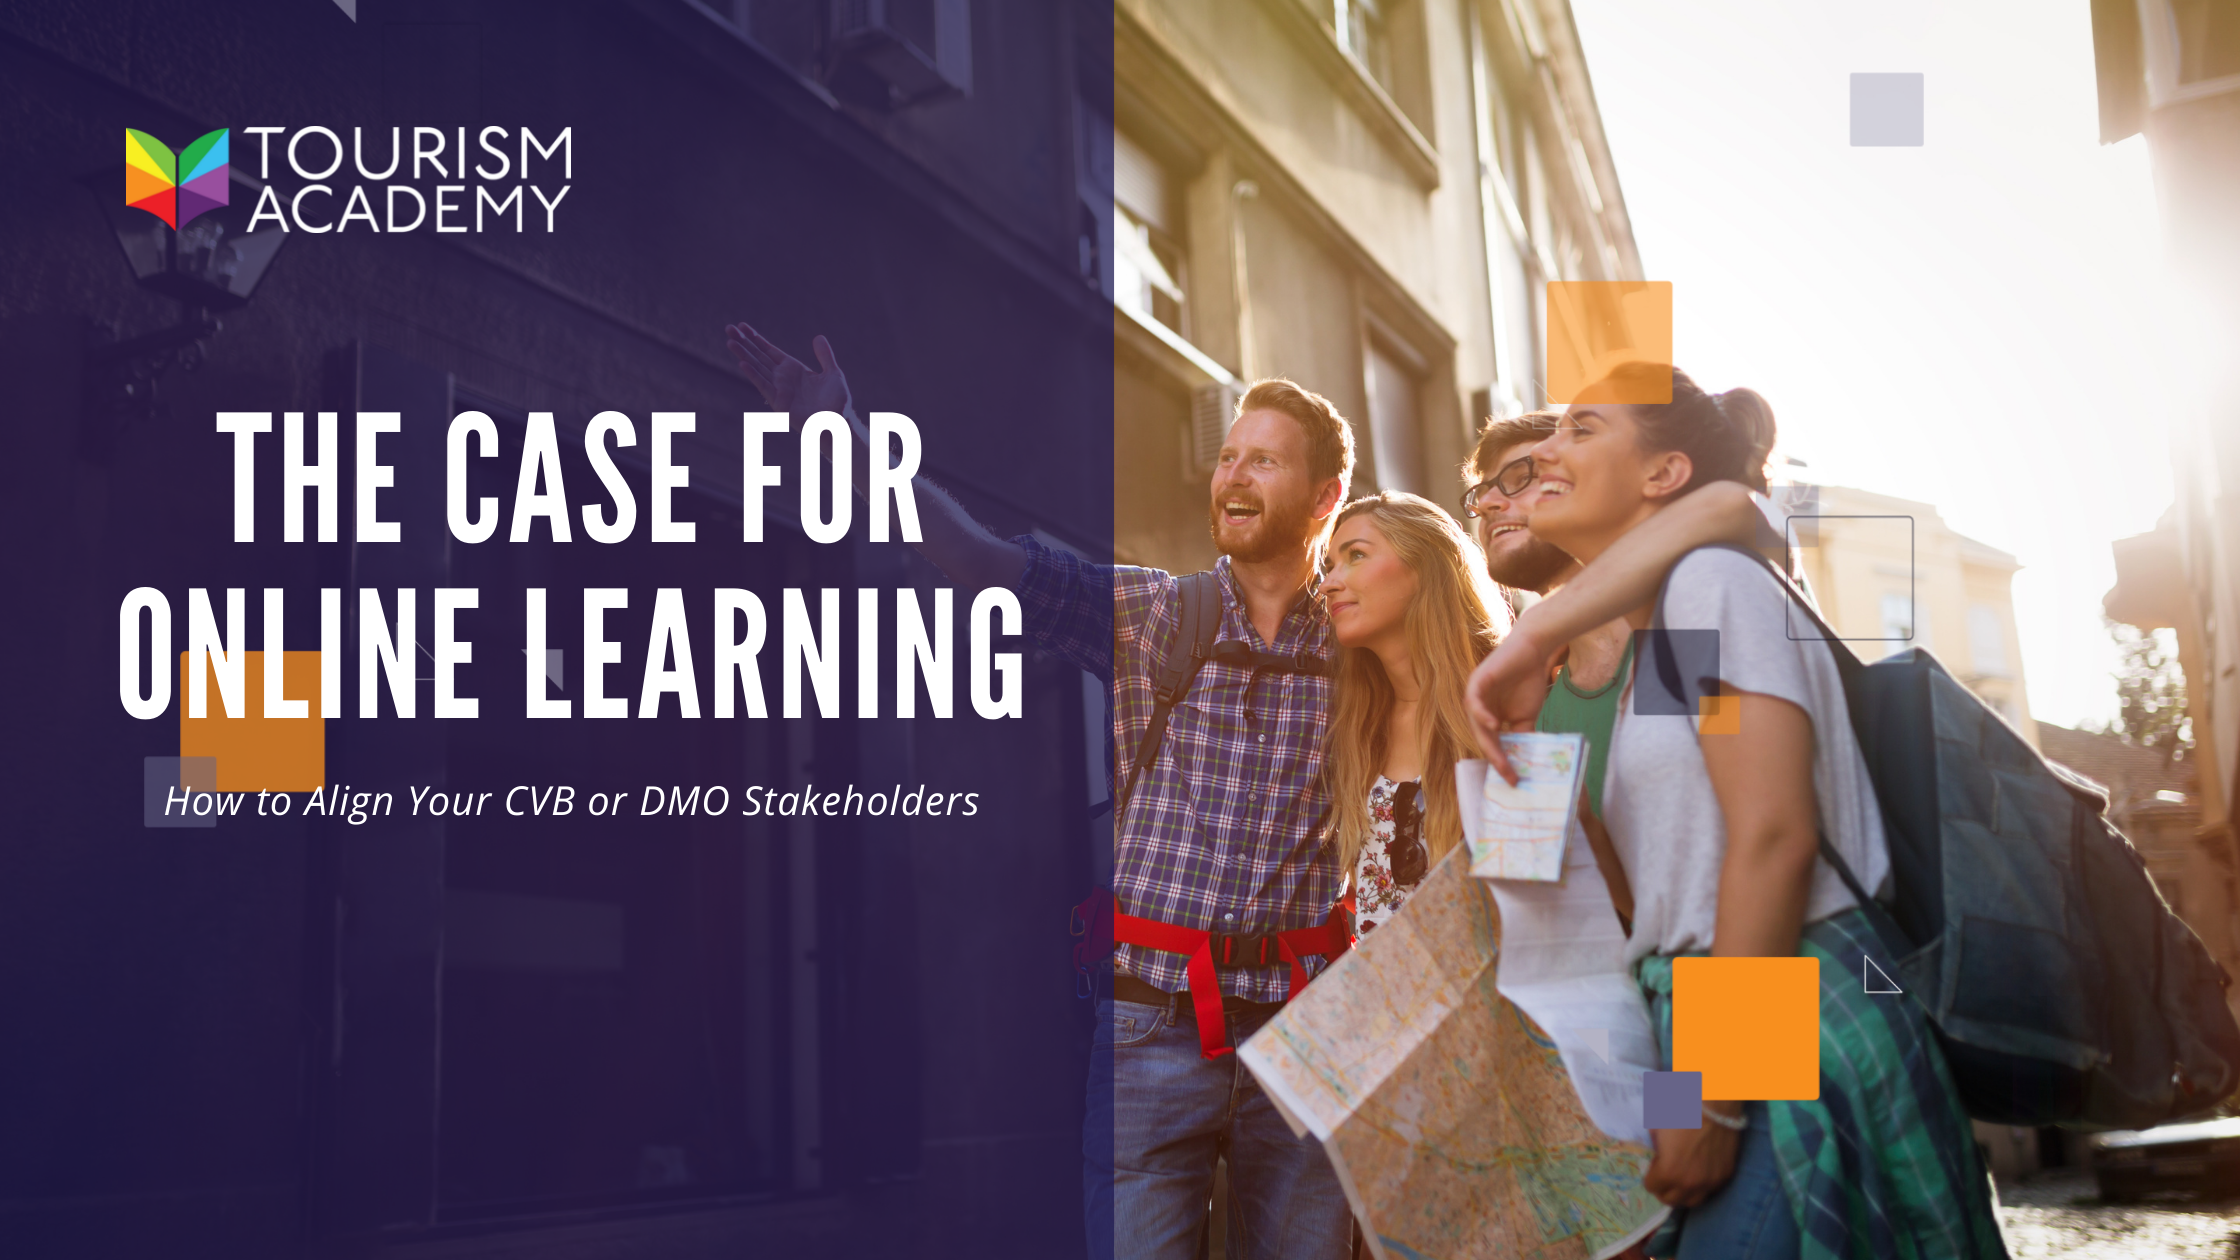 cvb dmo align stakeholders build relevance stay relevant